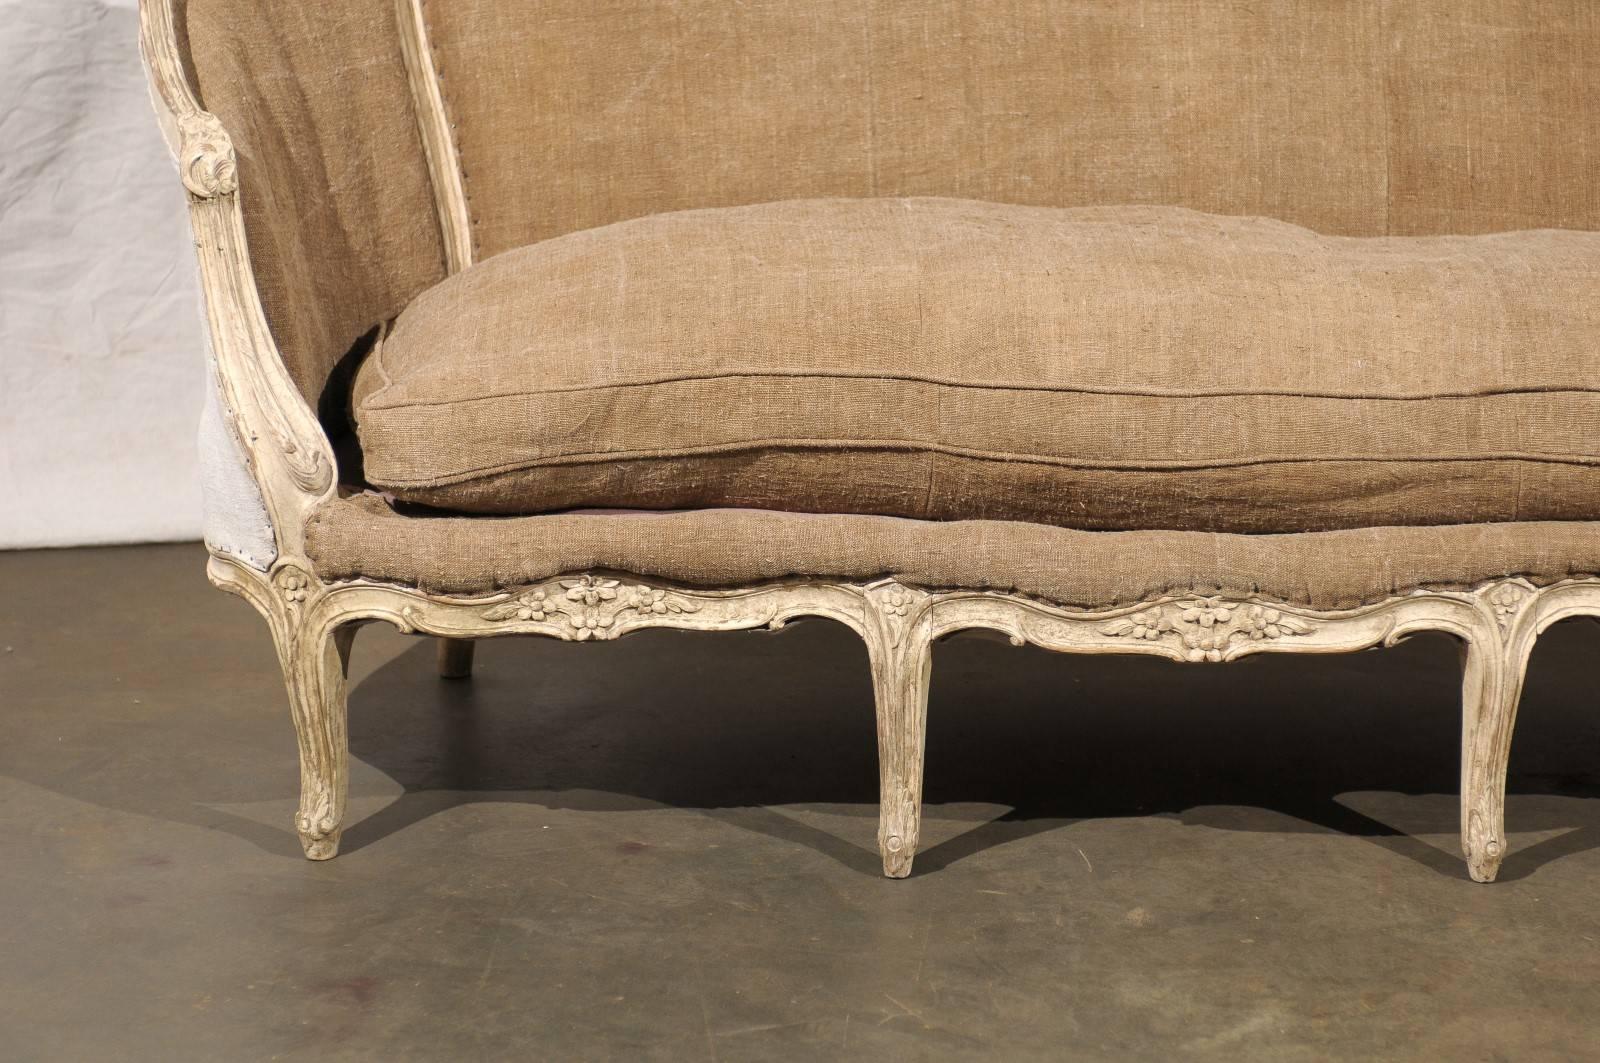 19th century antique Louis XV style french sofa.